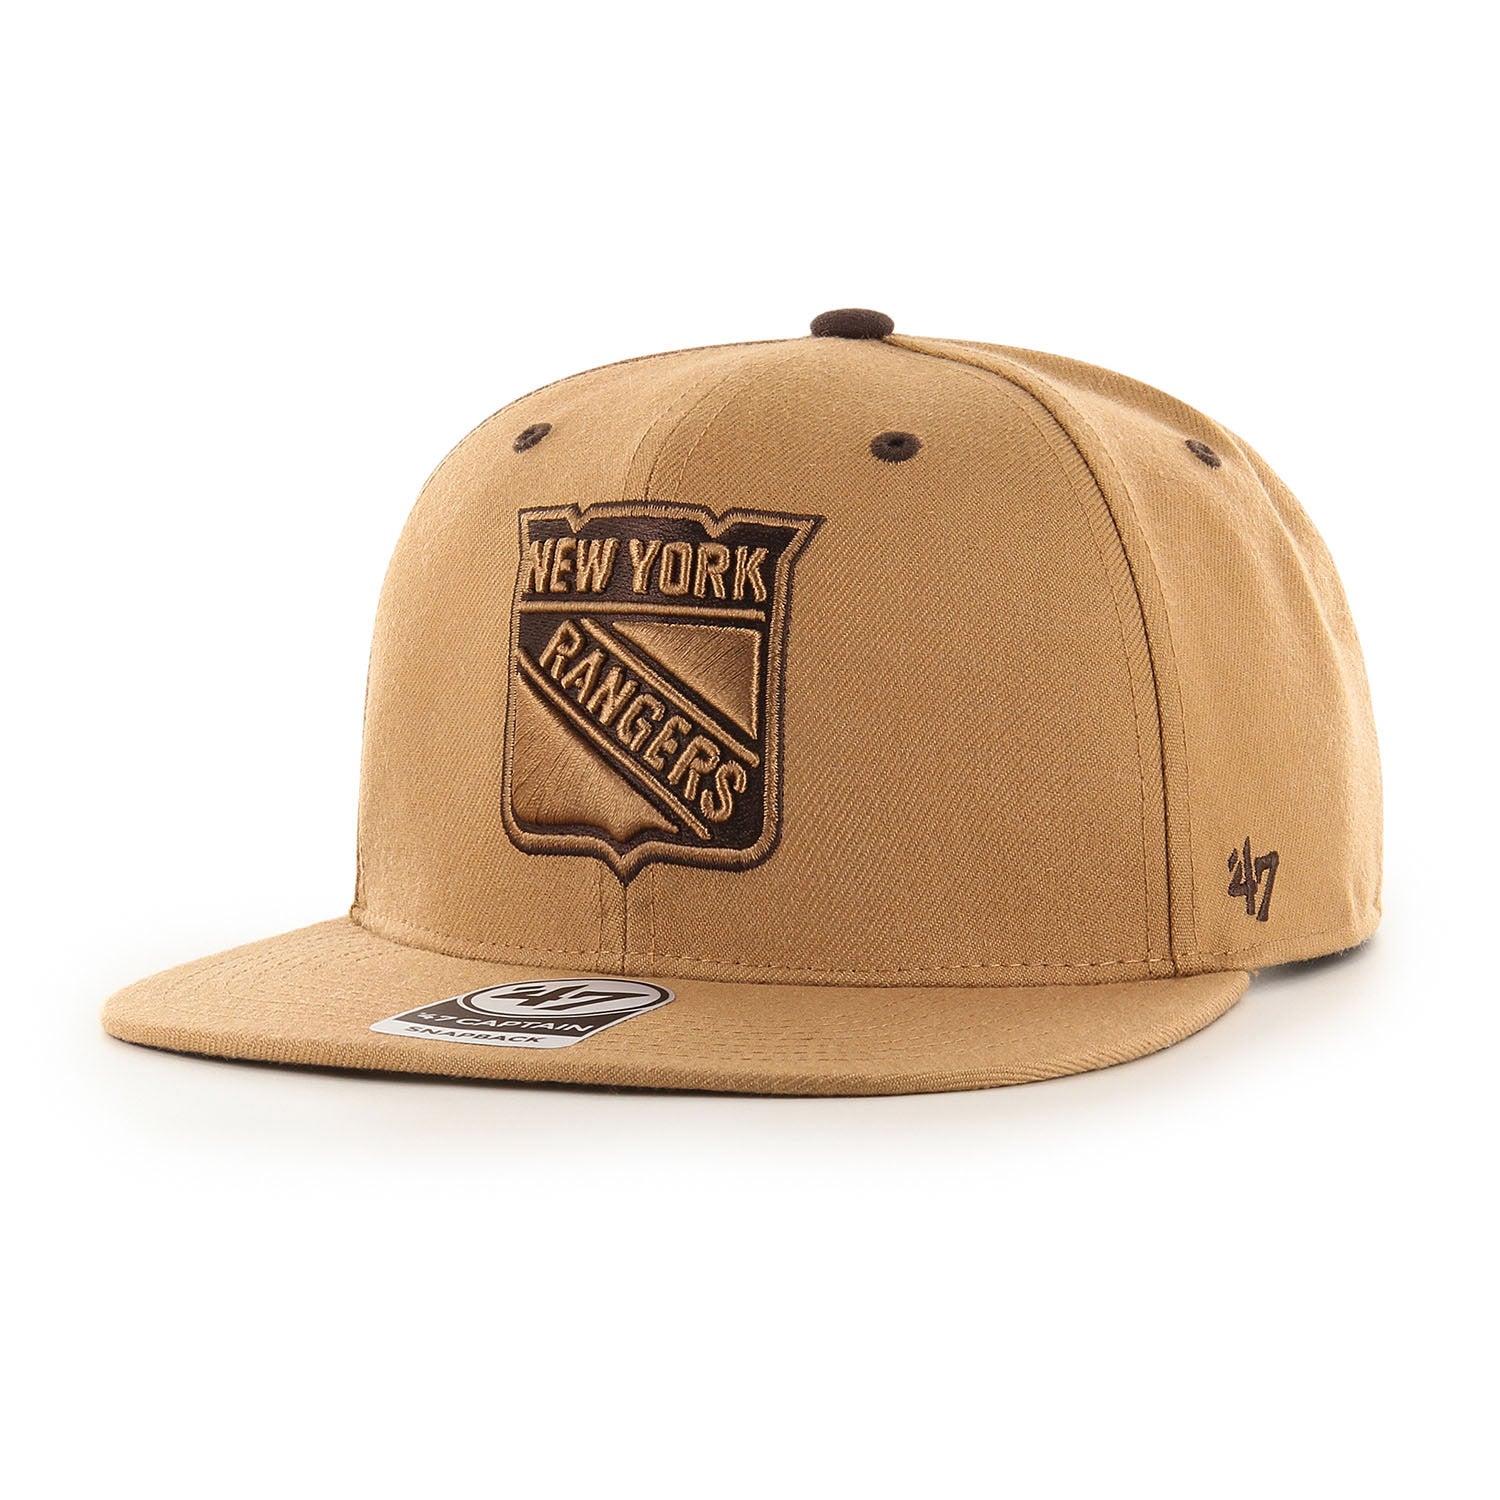 New York Rangers Snapback Hats